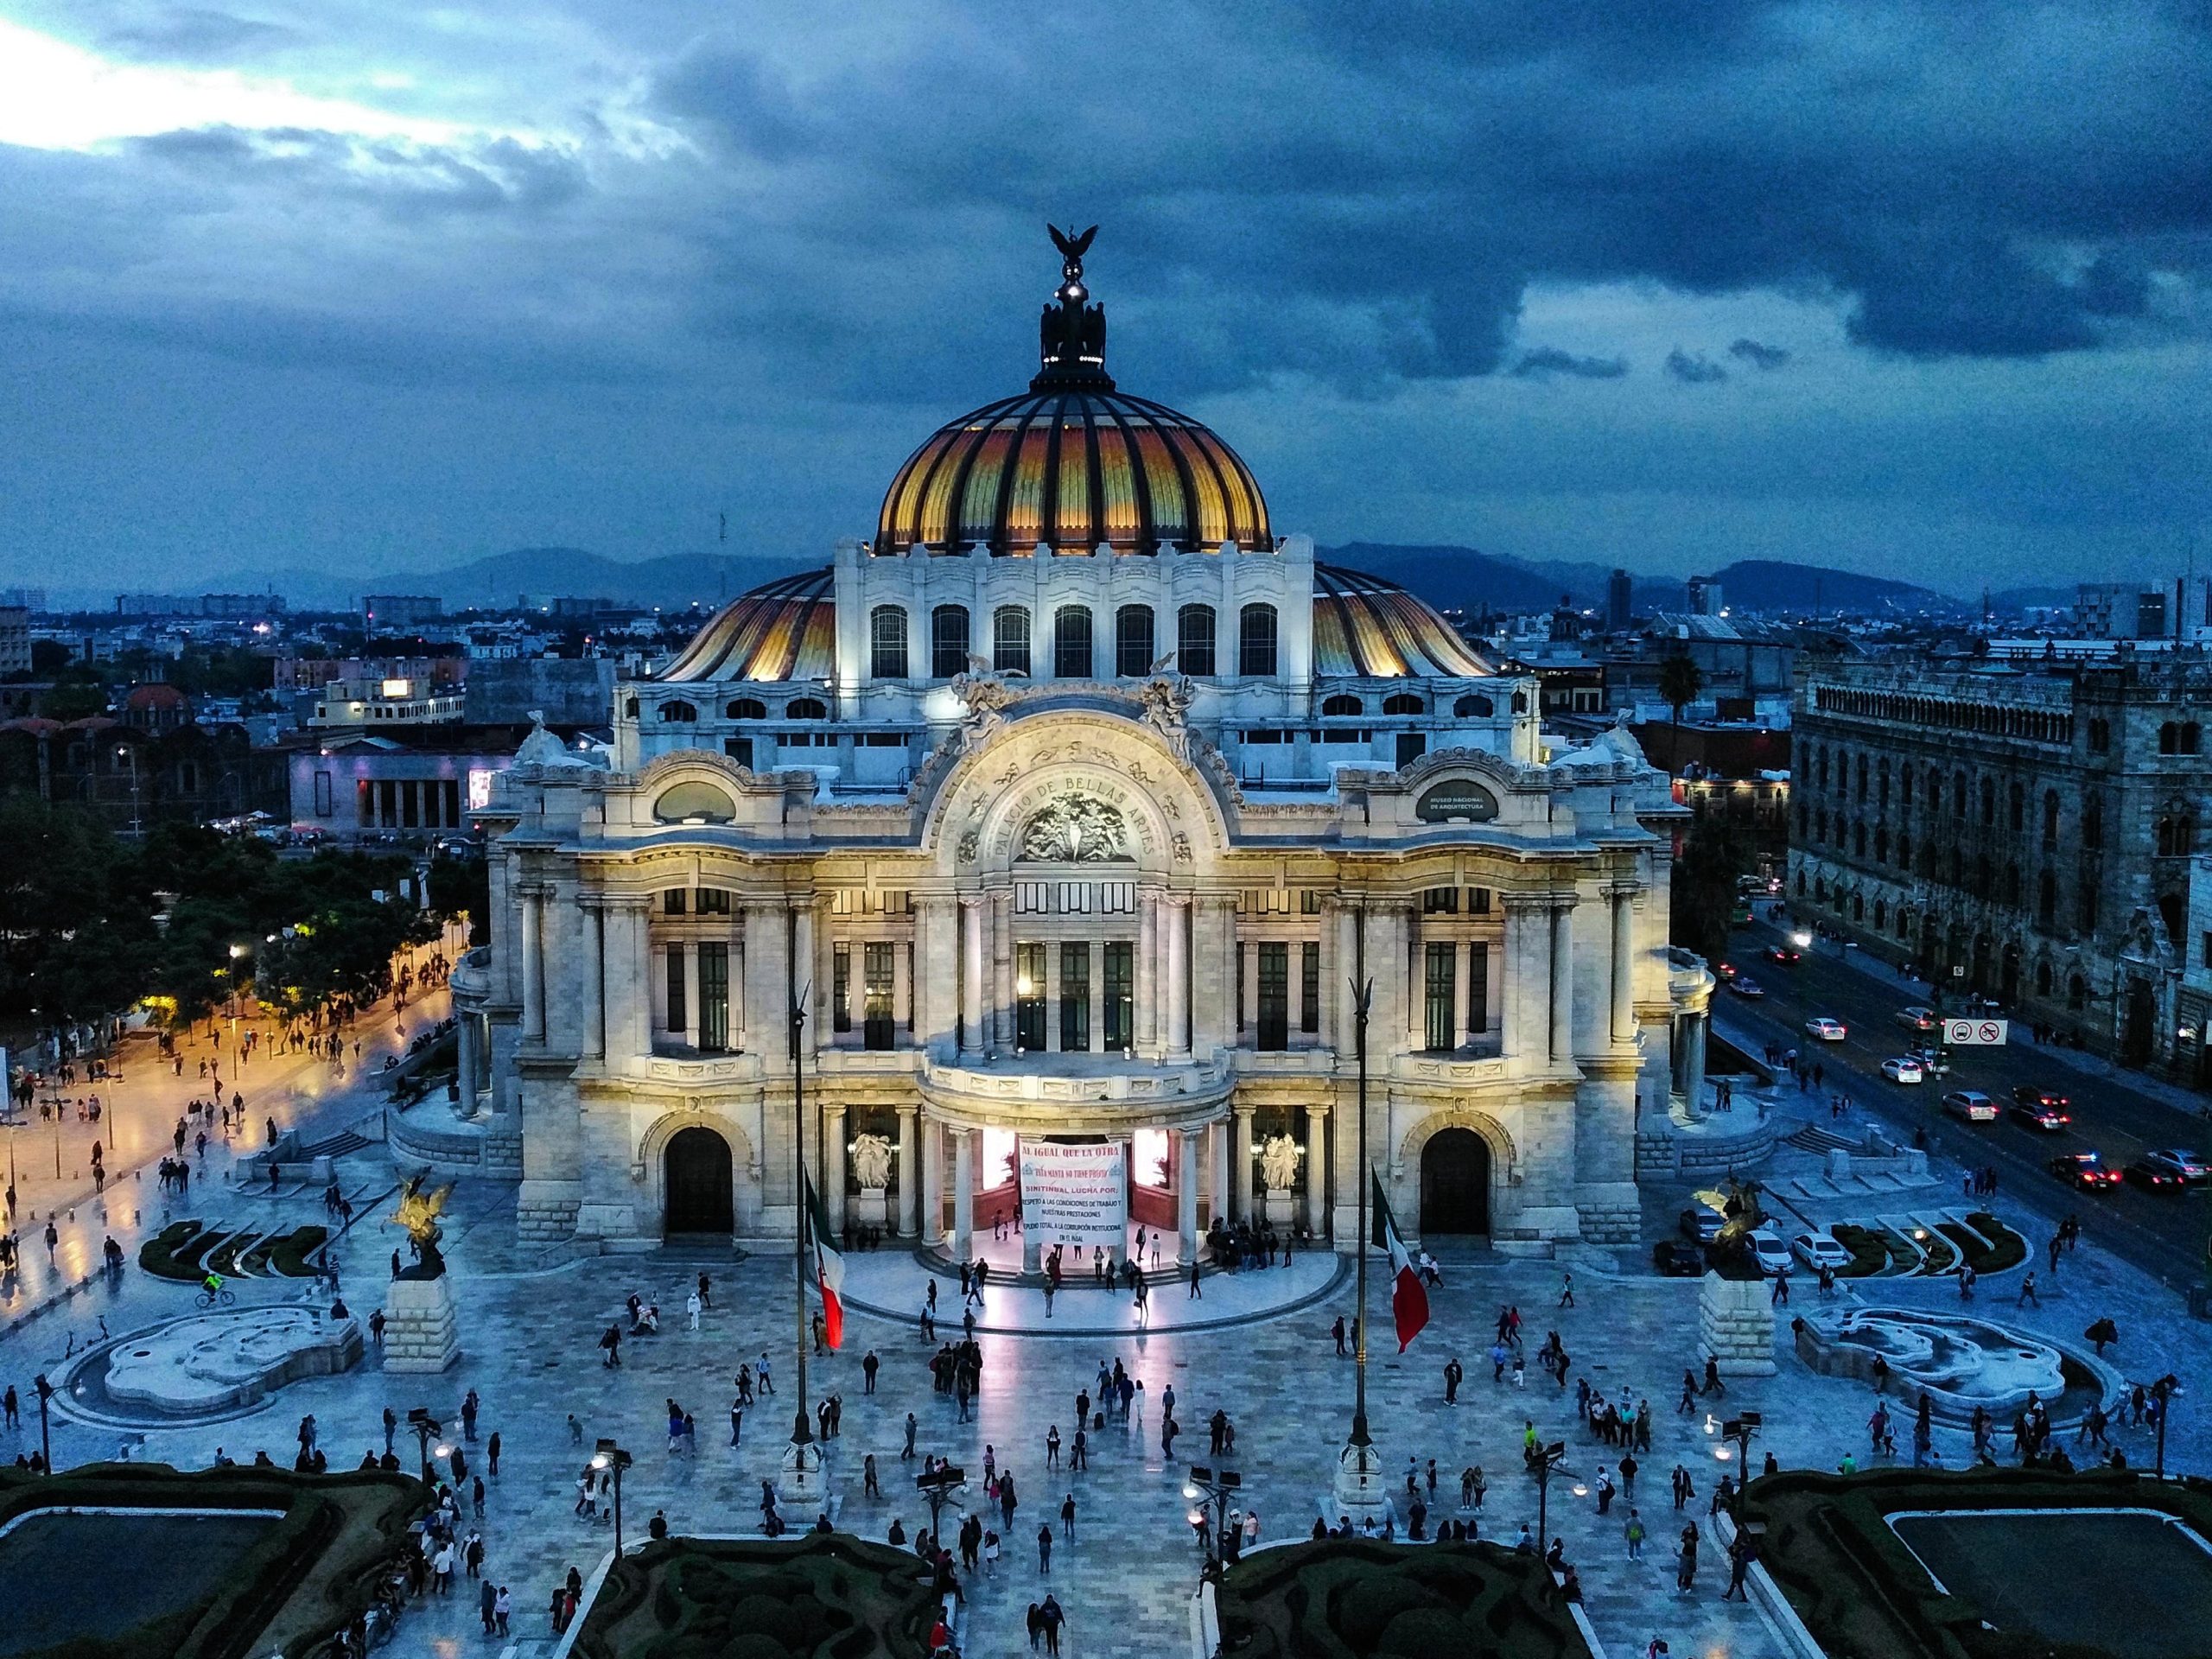 Spanish, Mexico